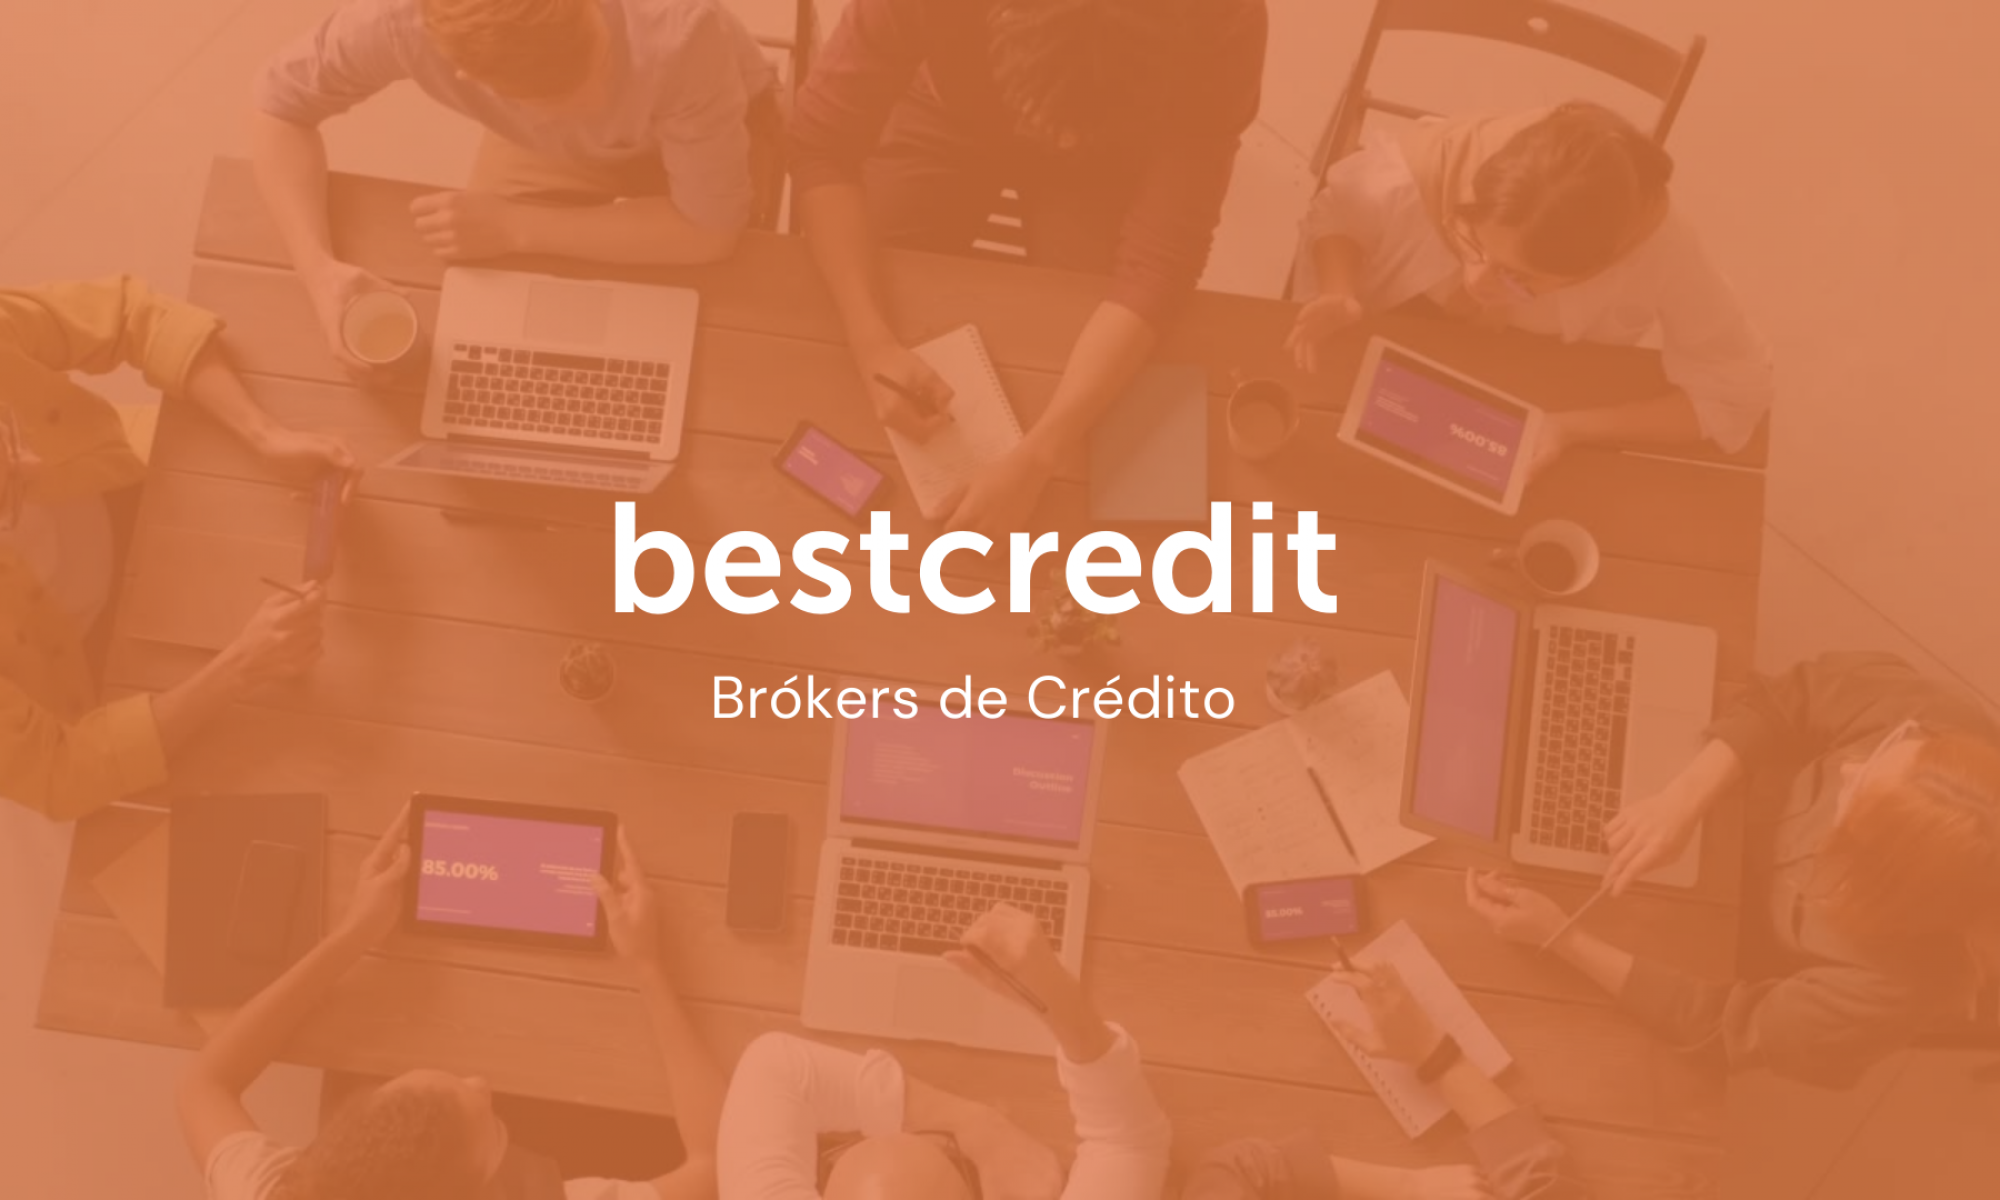 BestCredit -- Brokers de Crédito